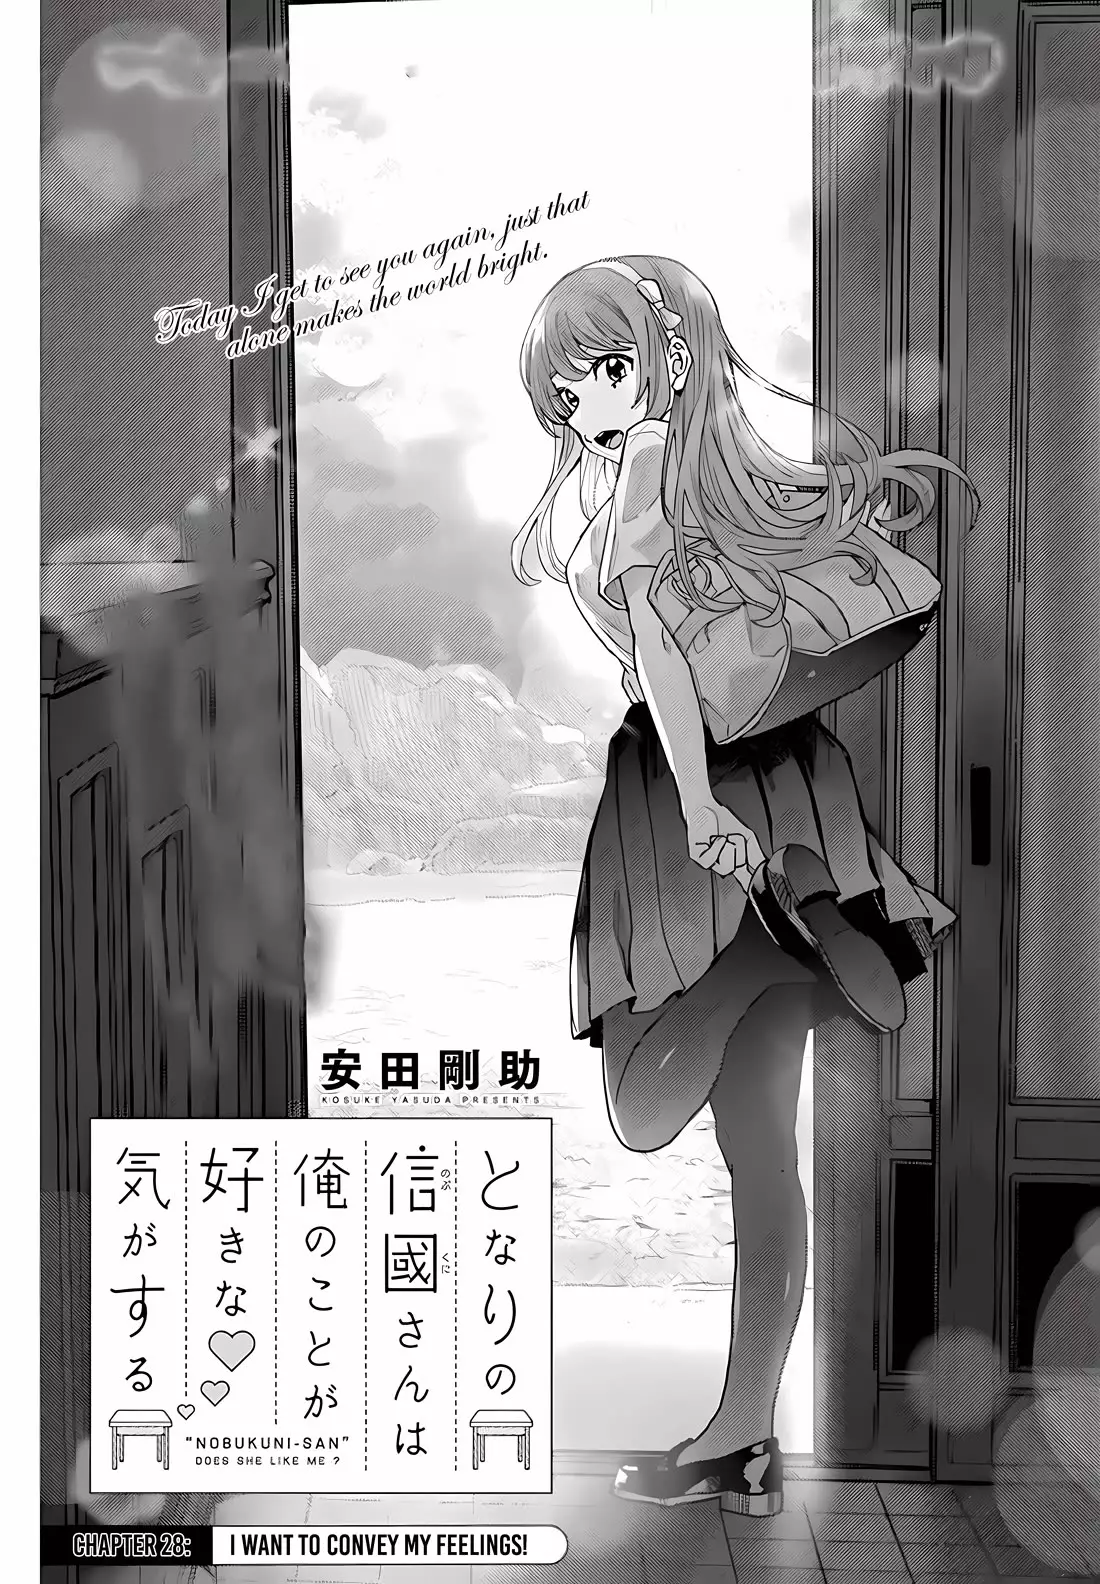 "nobukuni-San" Does She Like Me? - 28 page 2-2796b23b